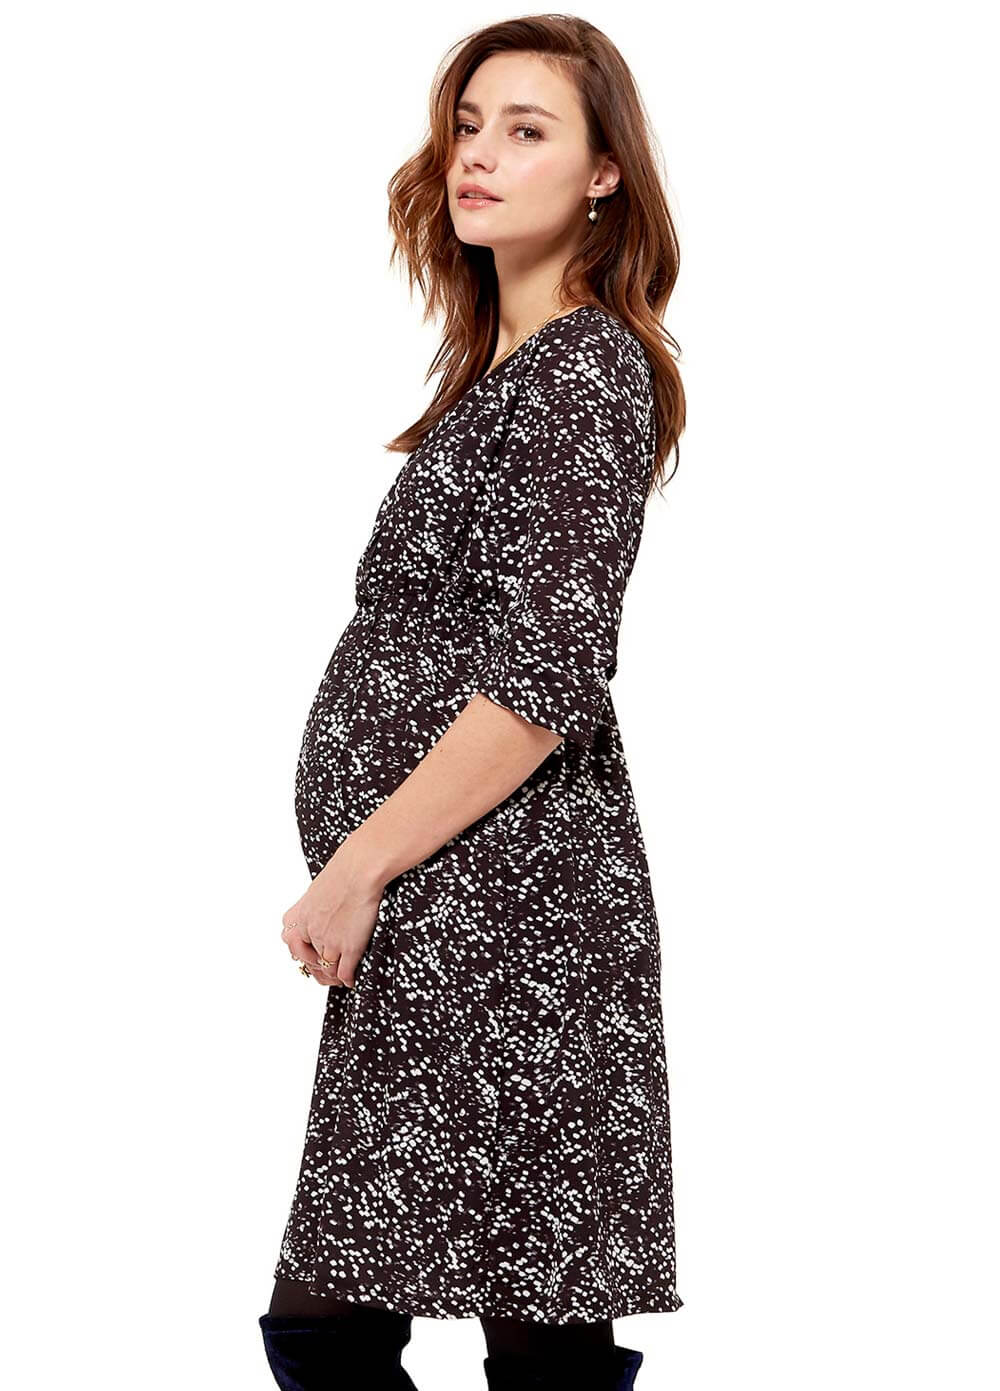 Black Confetti Print Maternity & Nursing Dress by Queen mum